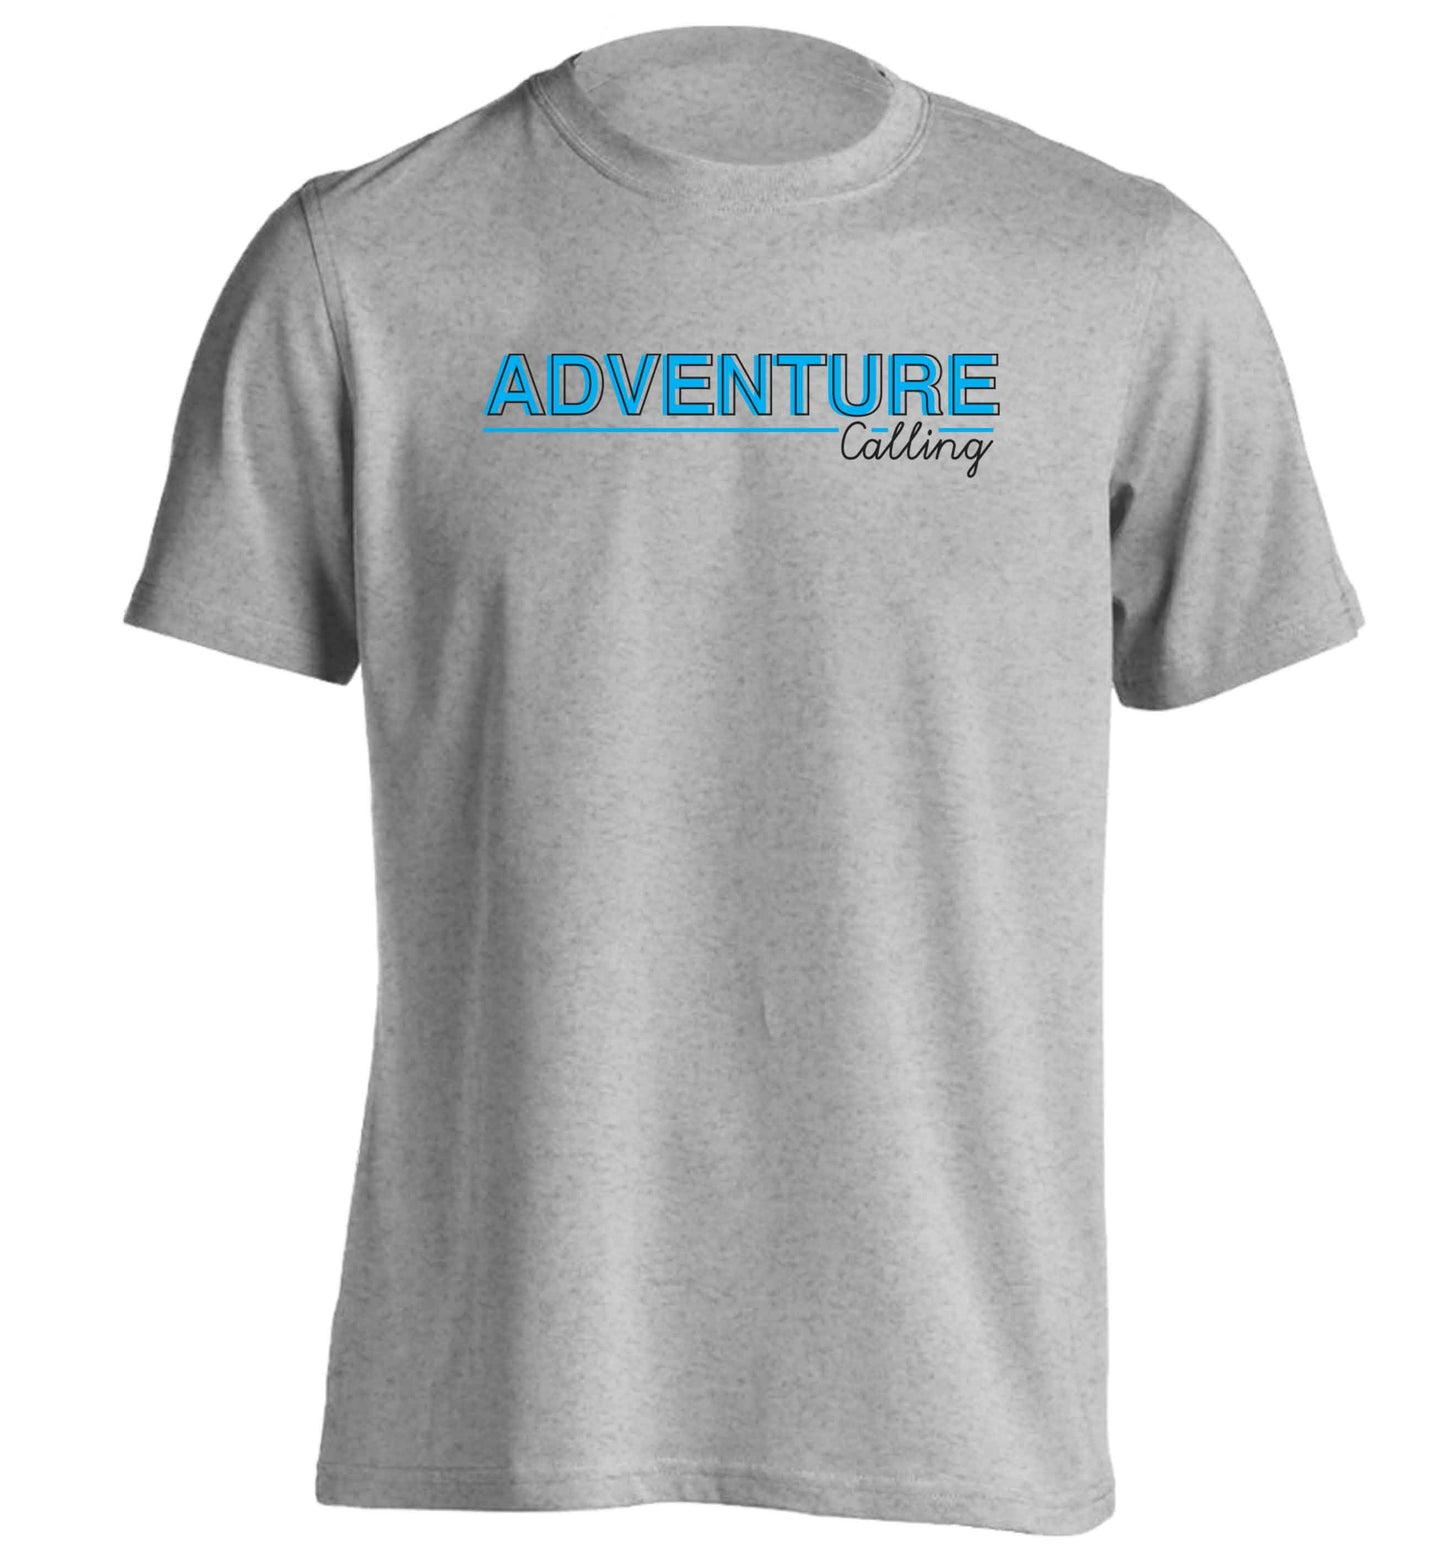 Adventure calling adults unisex grey Tshirt 2XL